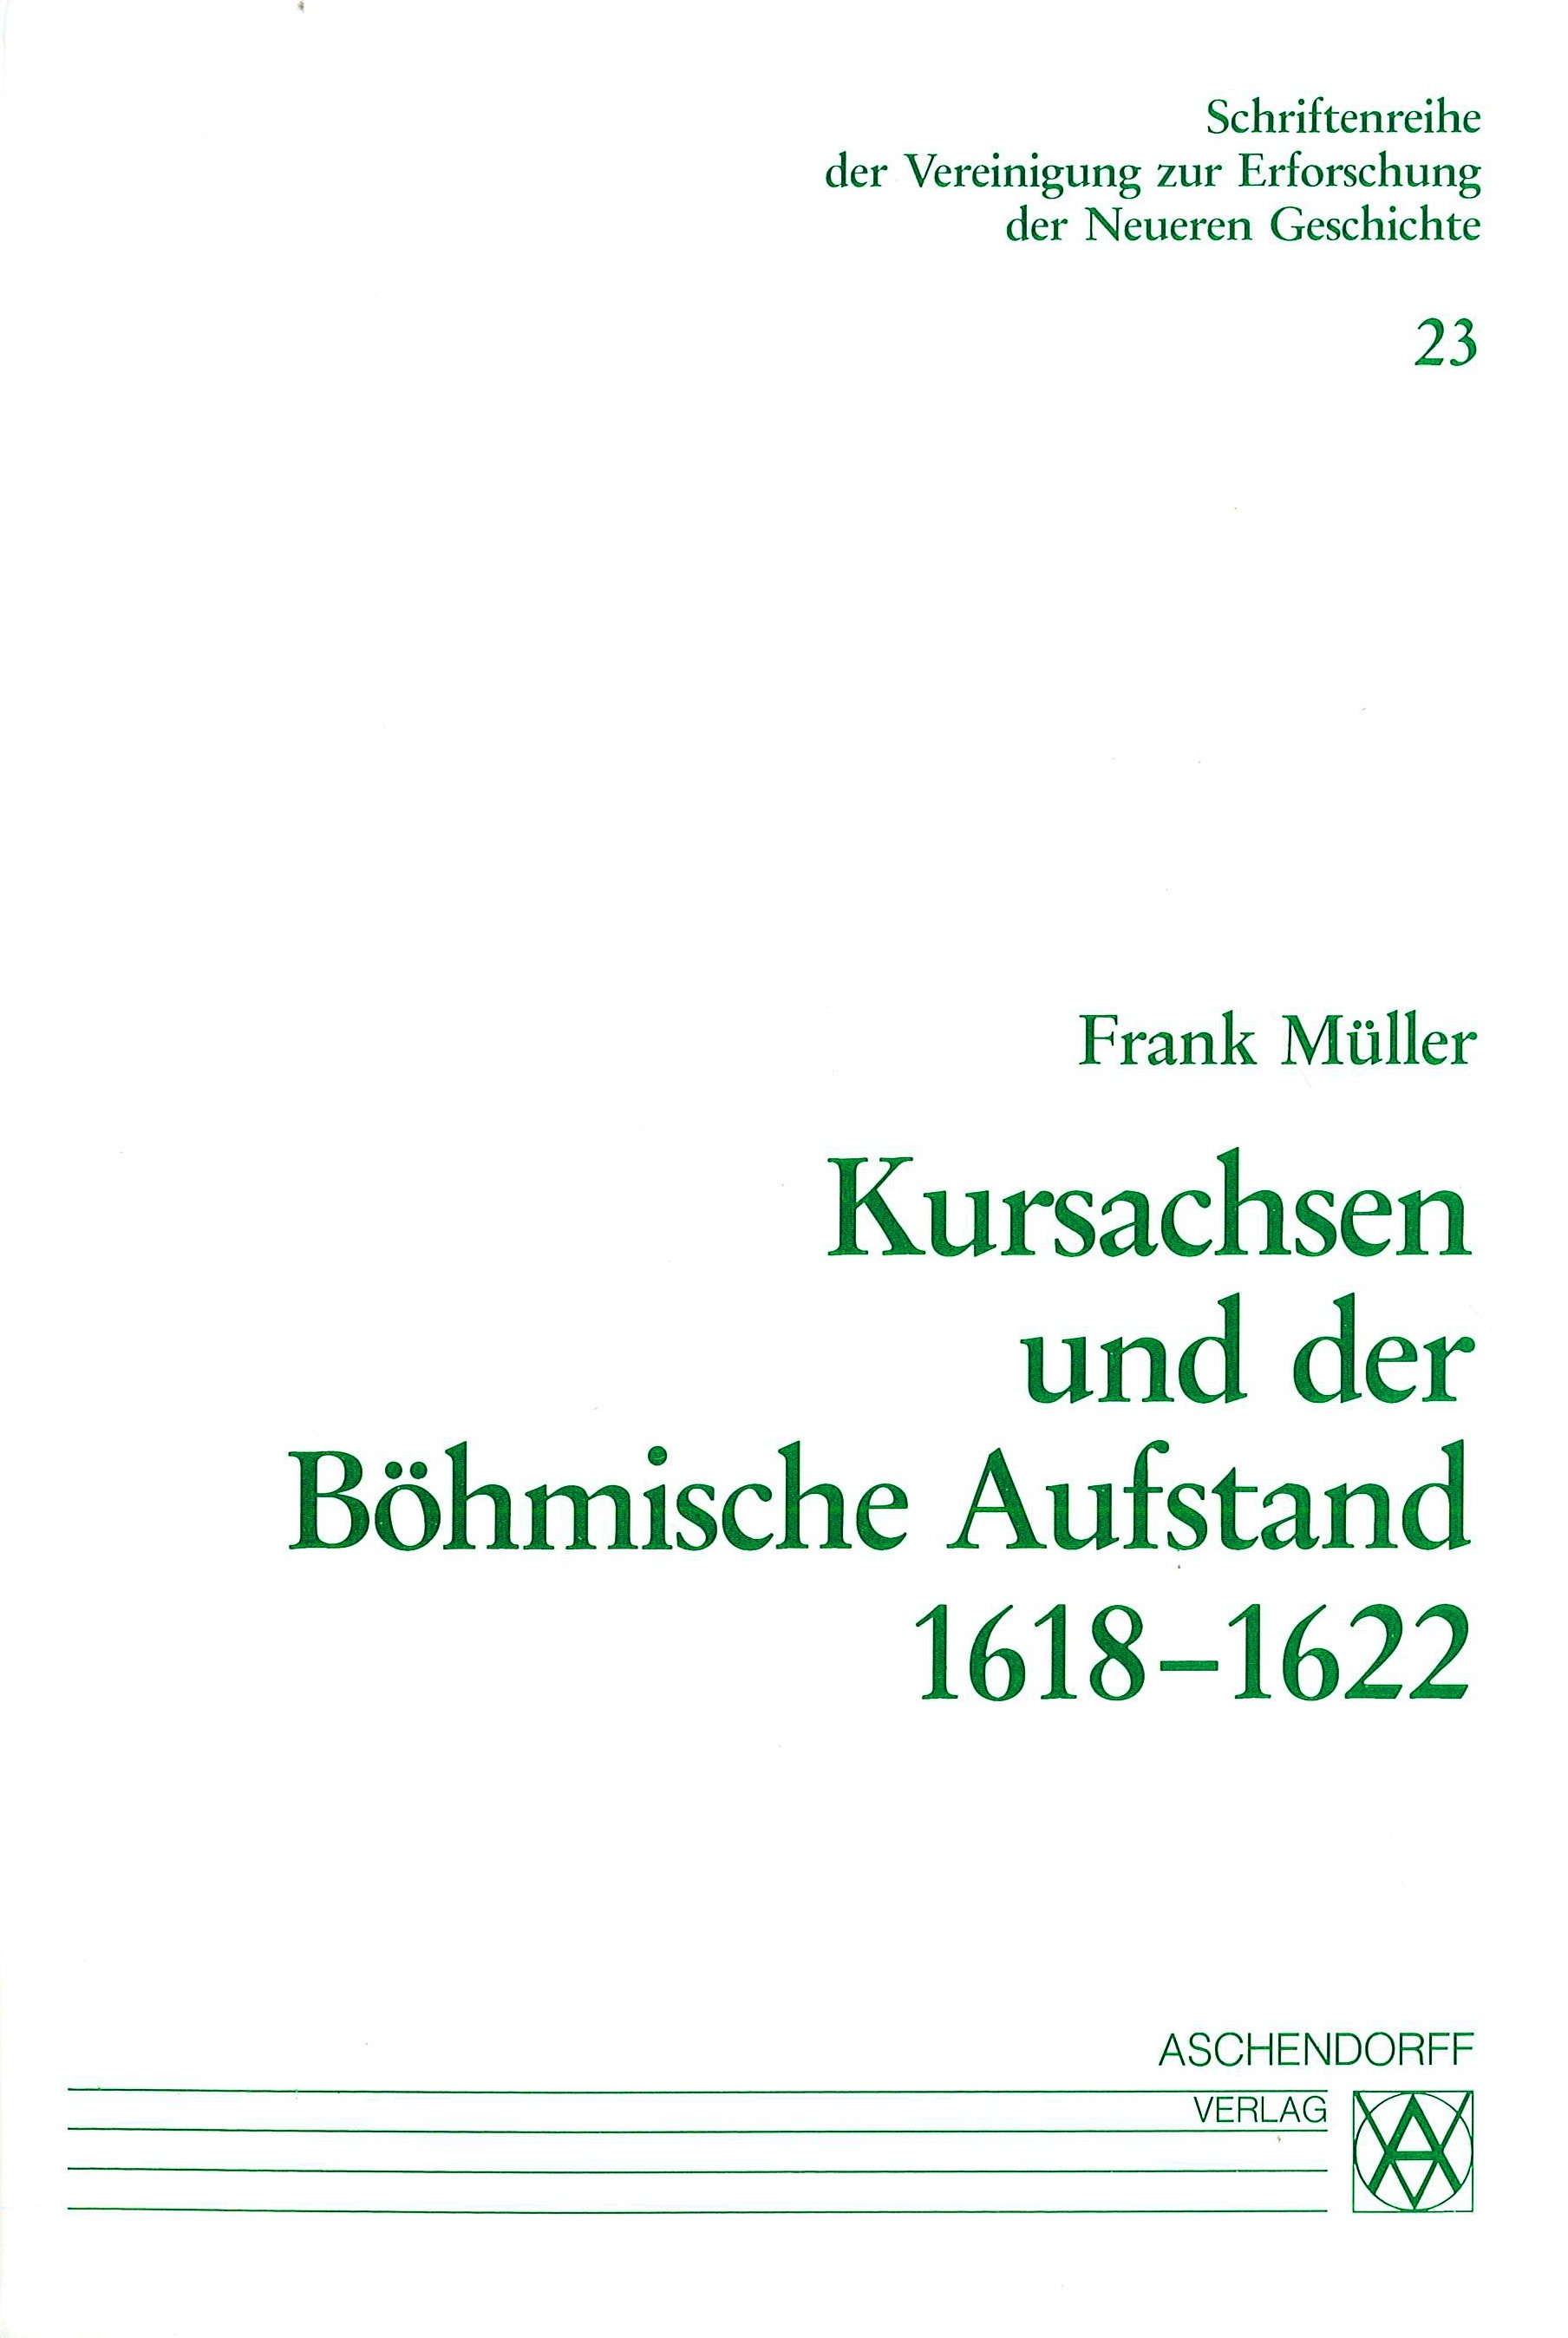 Müller - 23.jpg